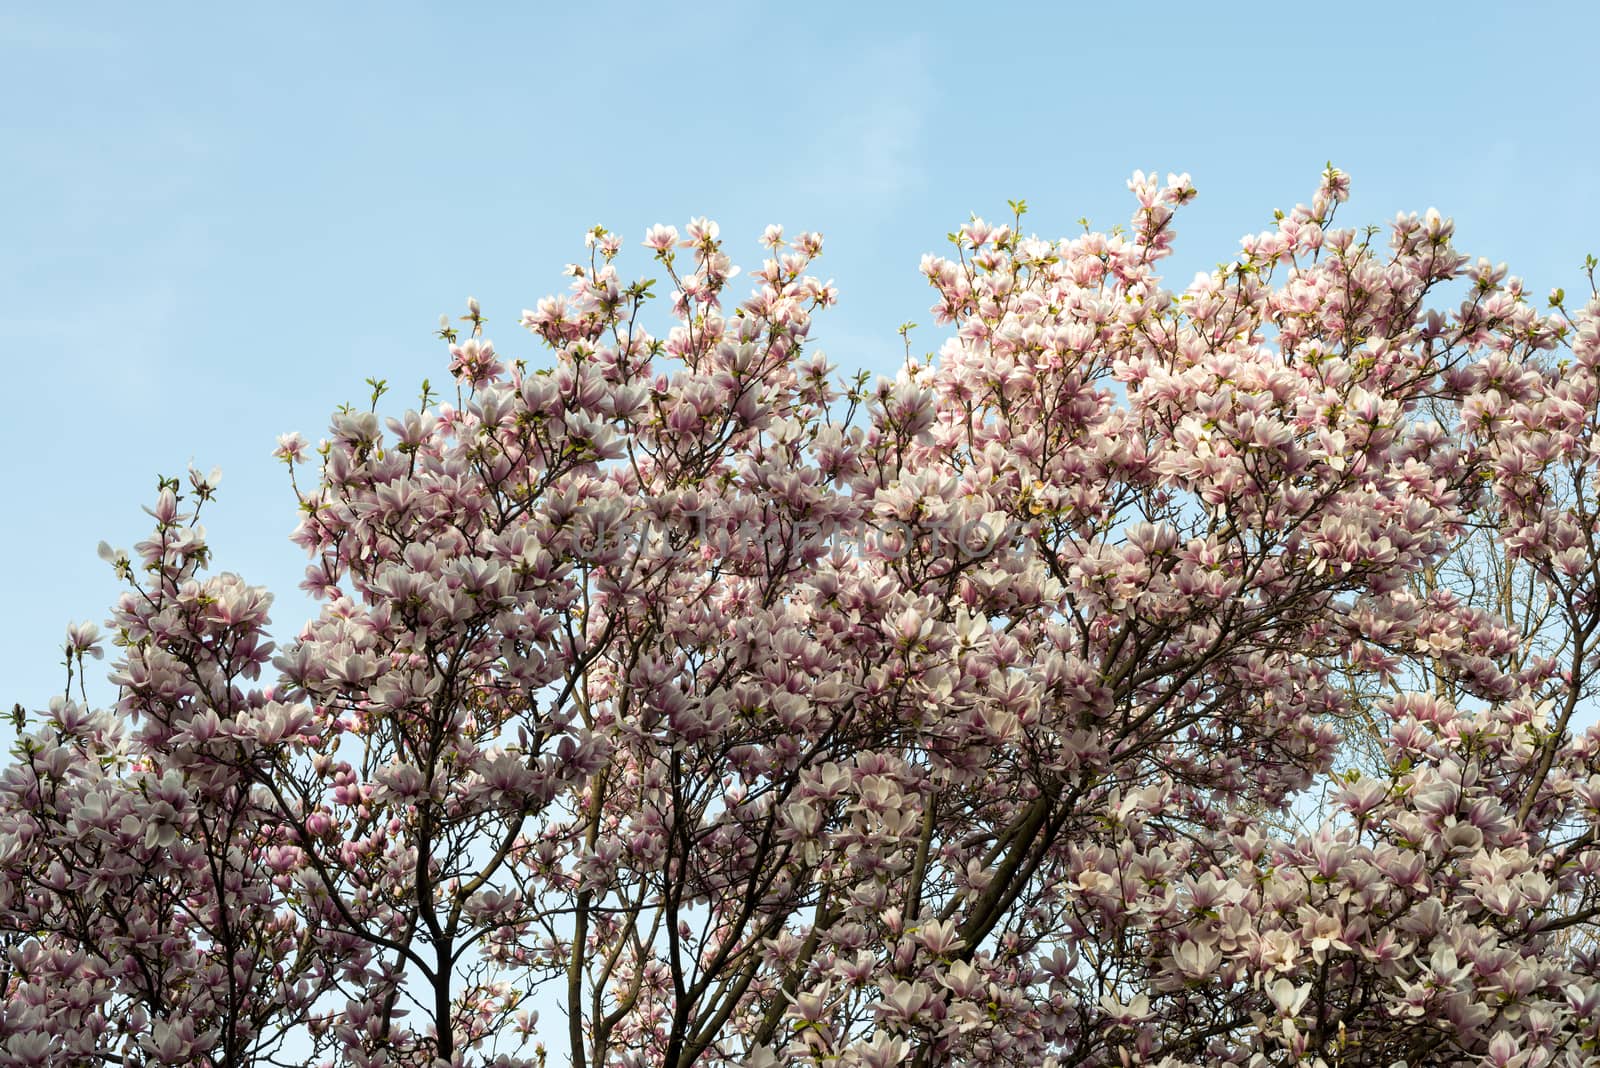 Magnolia blossom tree in spring by DNKSTUDIO